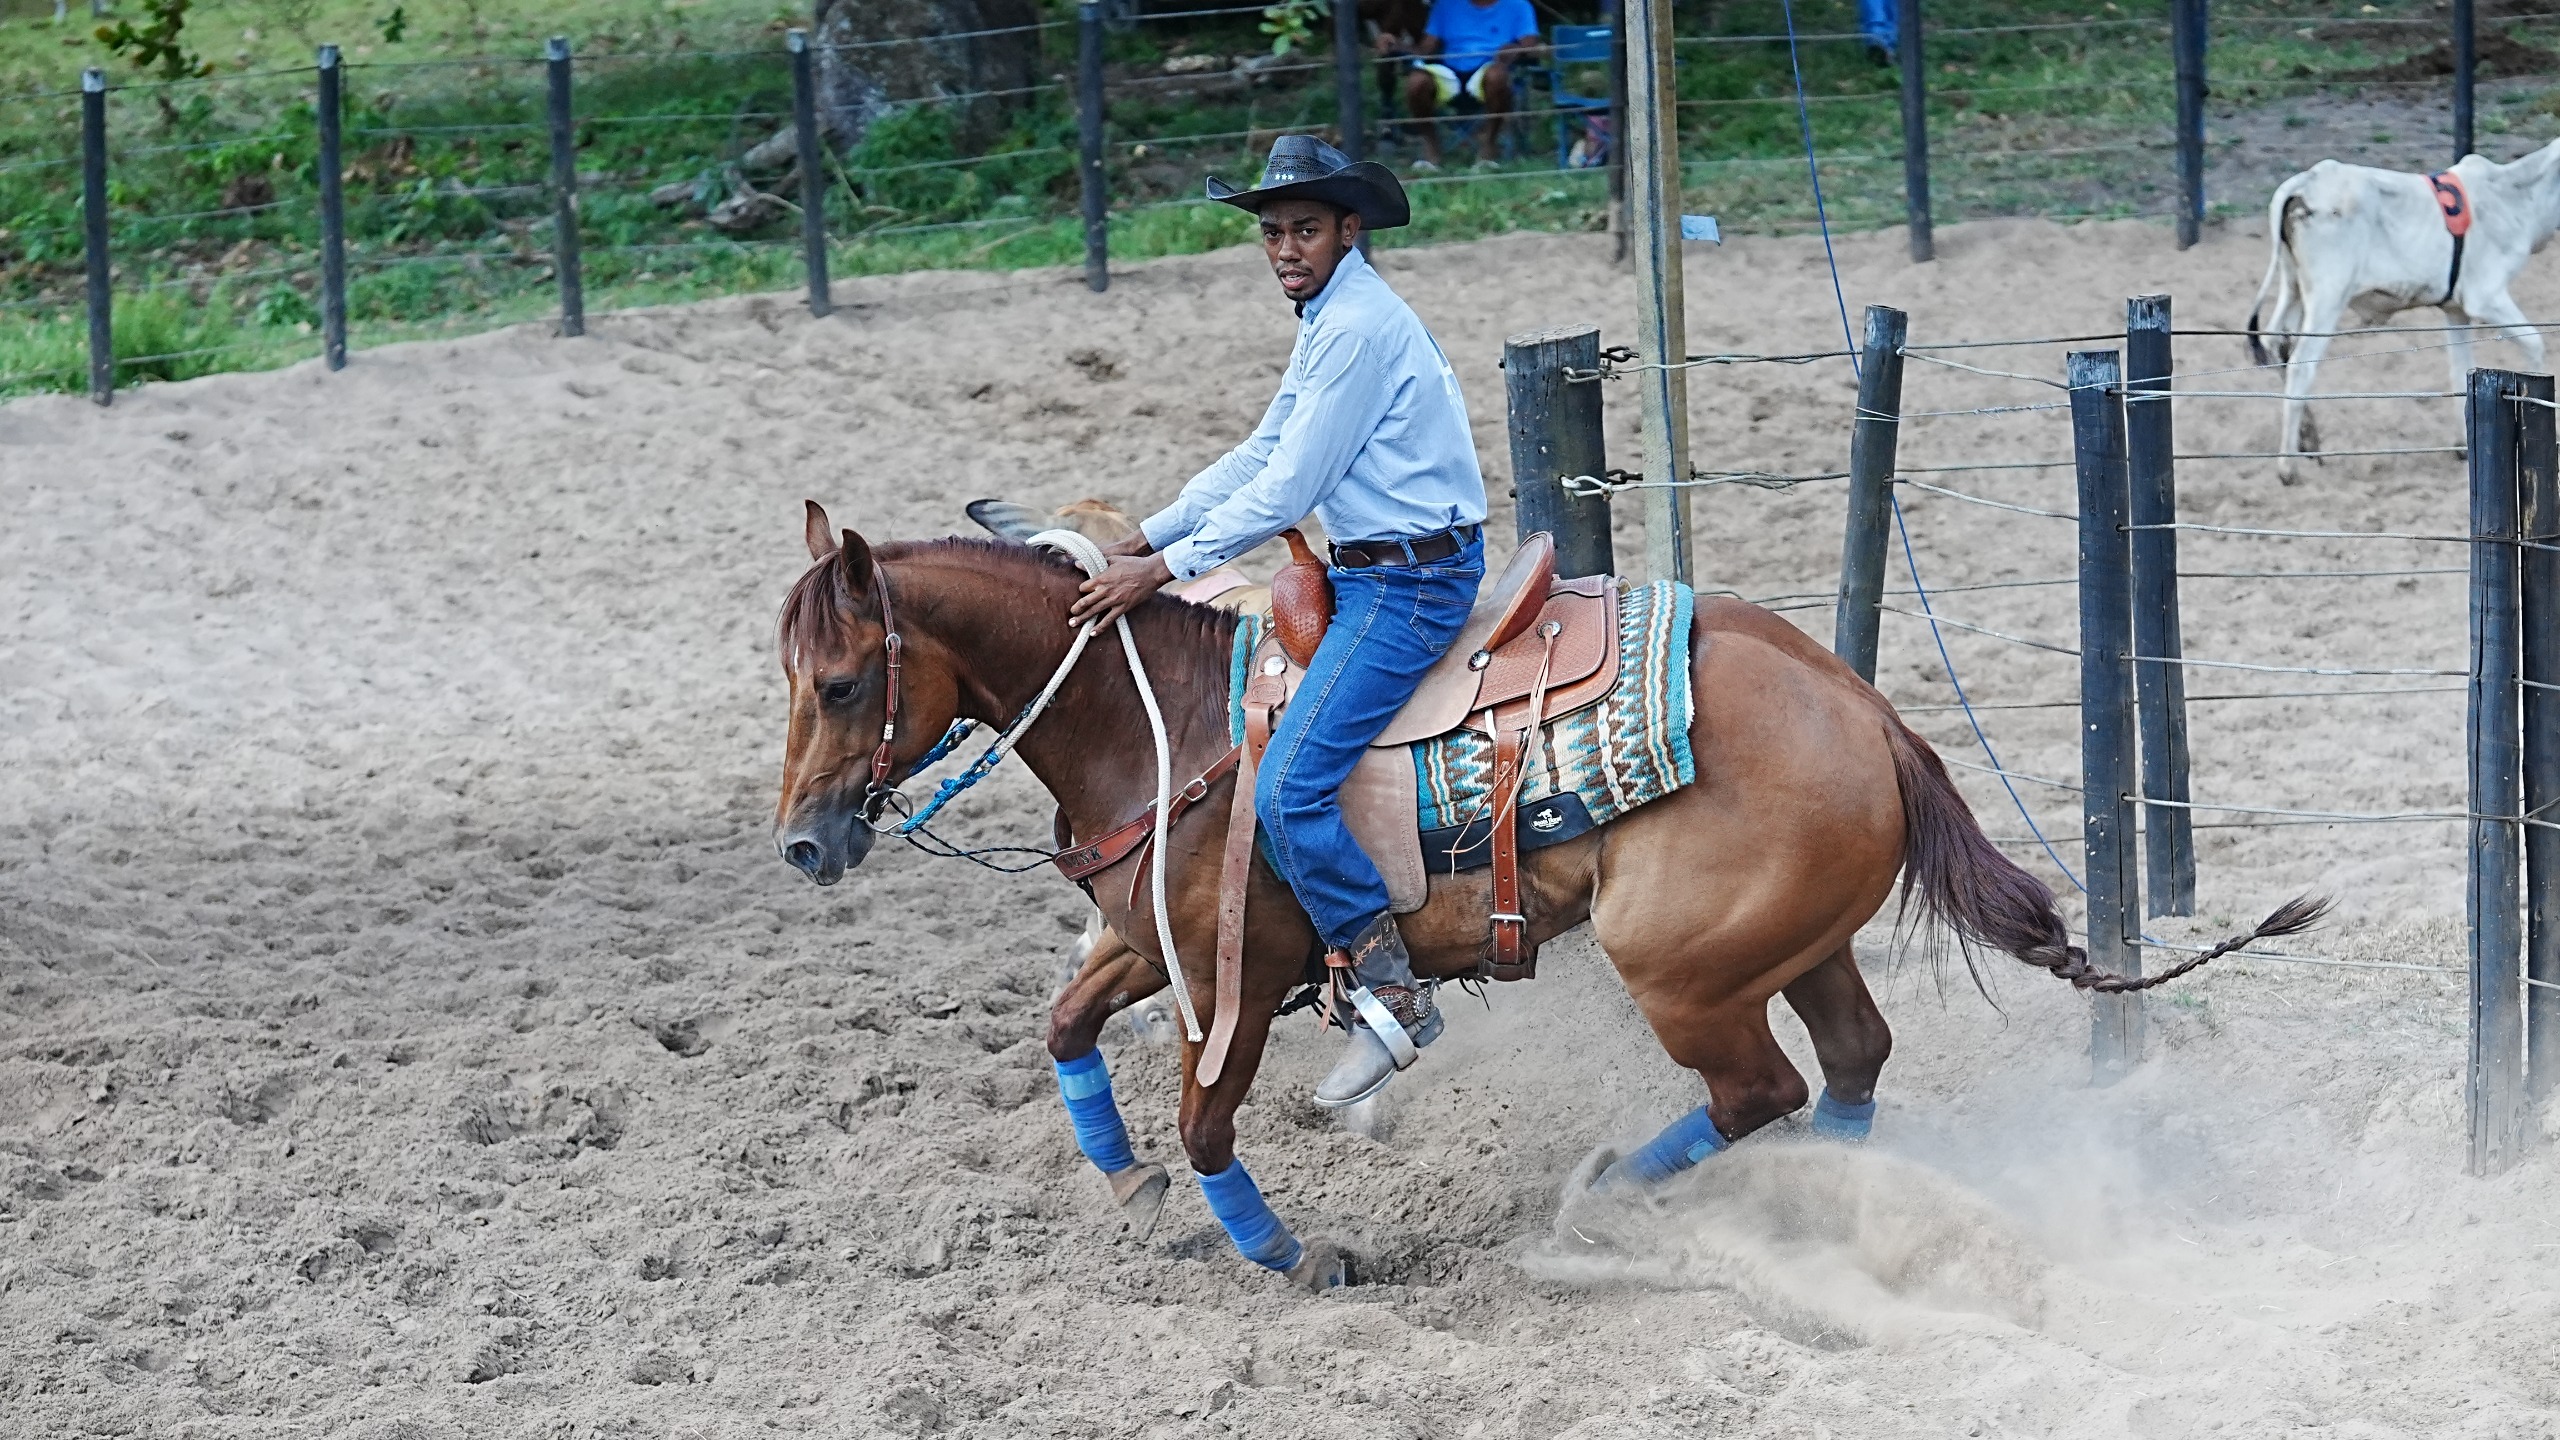 Com convite de Wesley Safadão, I Etapa do Campeonato Alagoano de Ranch Sorting promete agitar a Arena CPMF